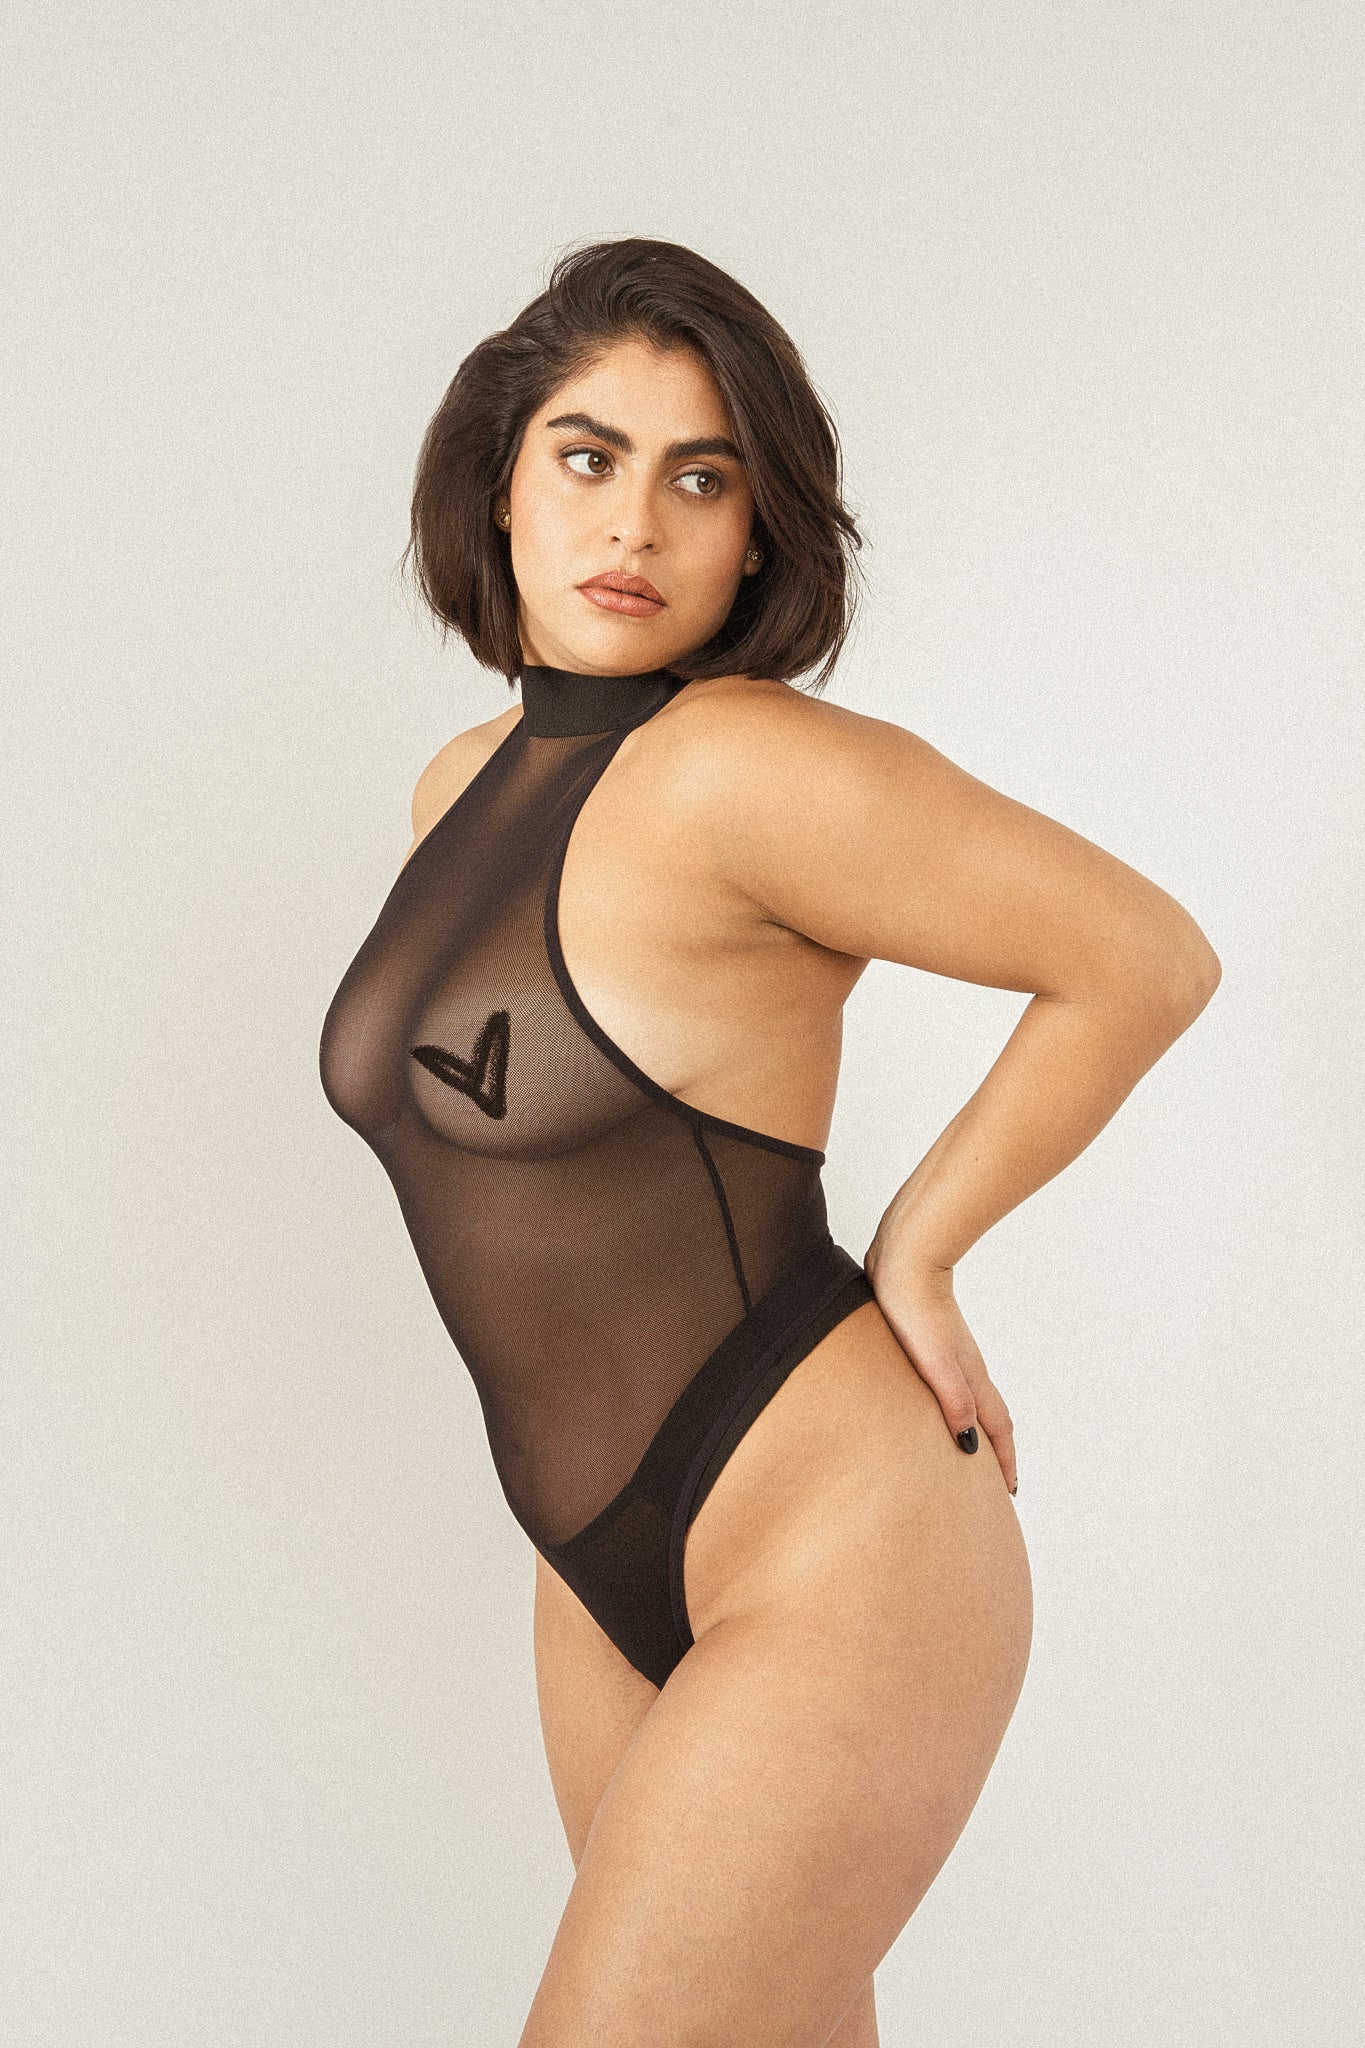 Julia bodysuit - black mesh